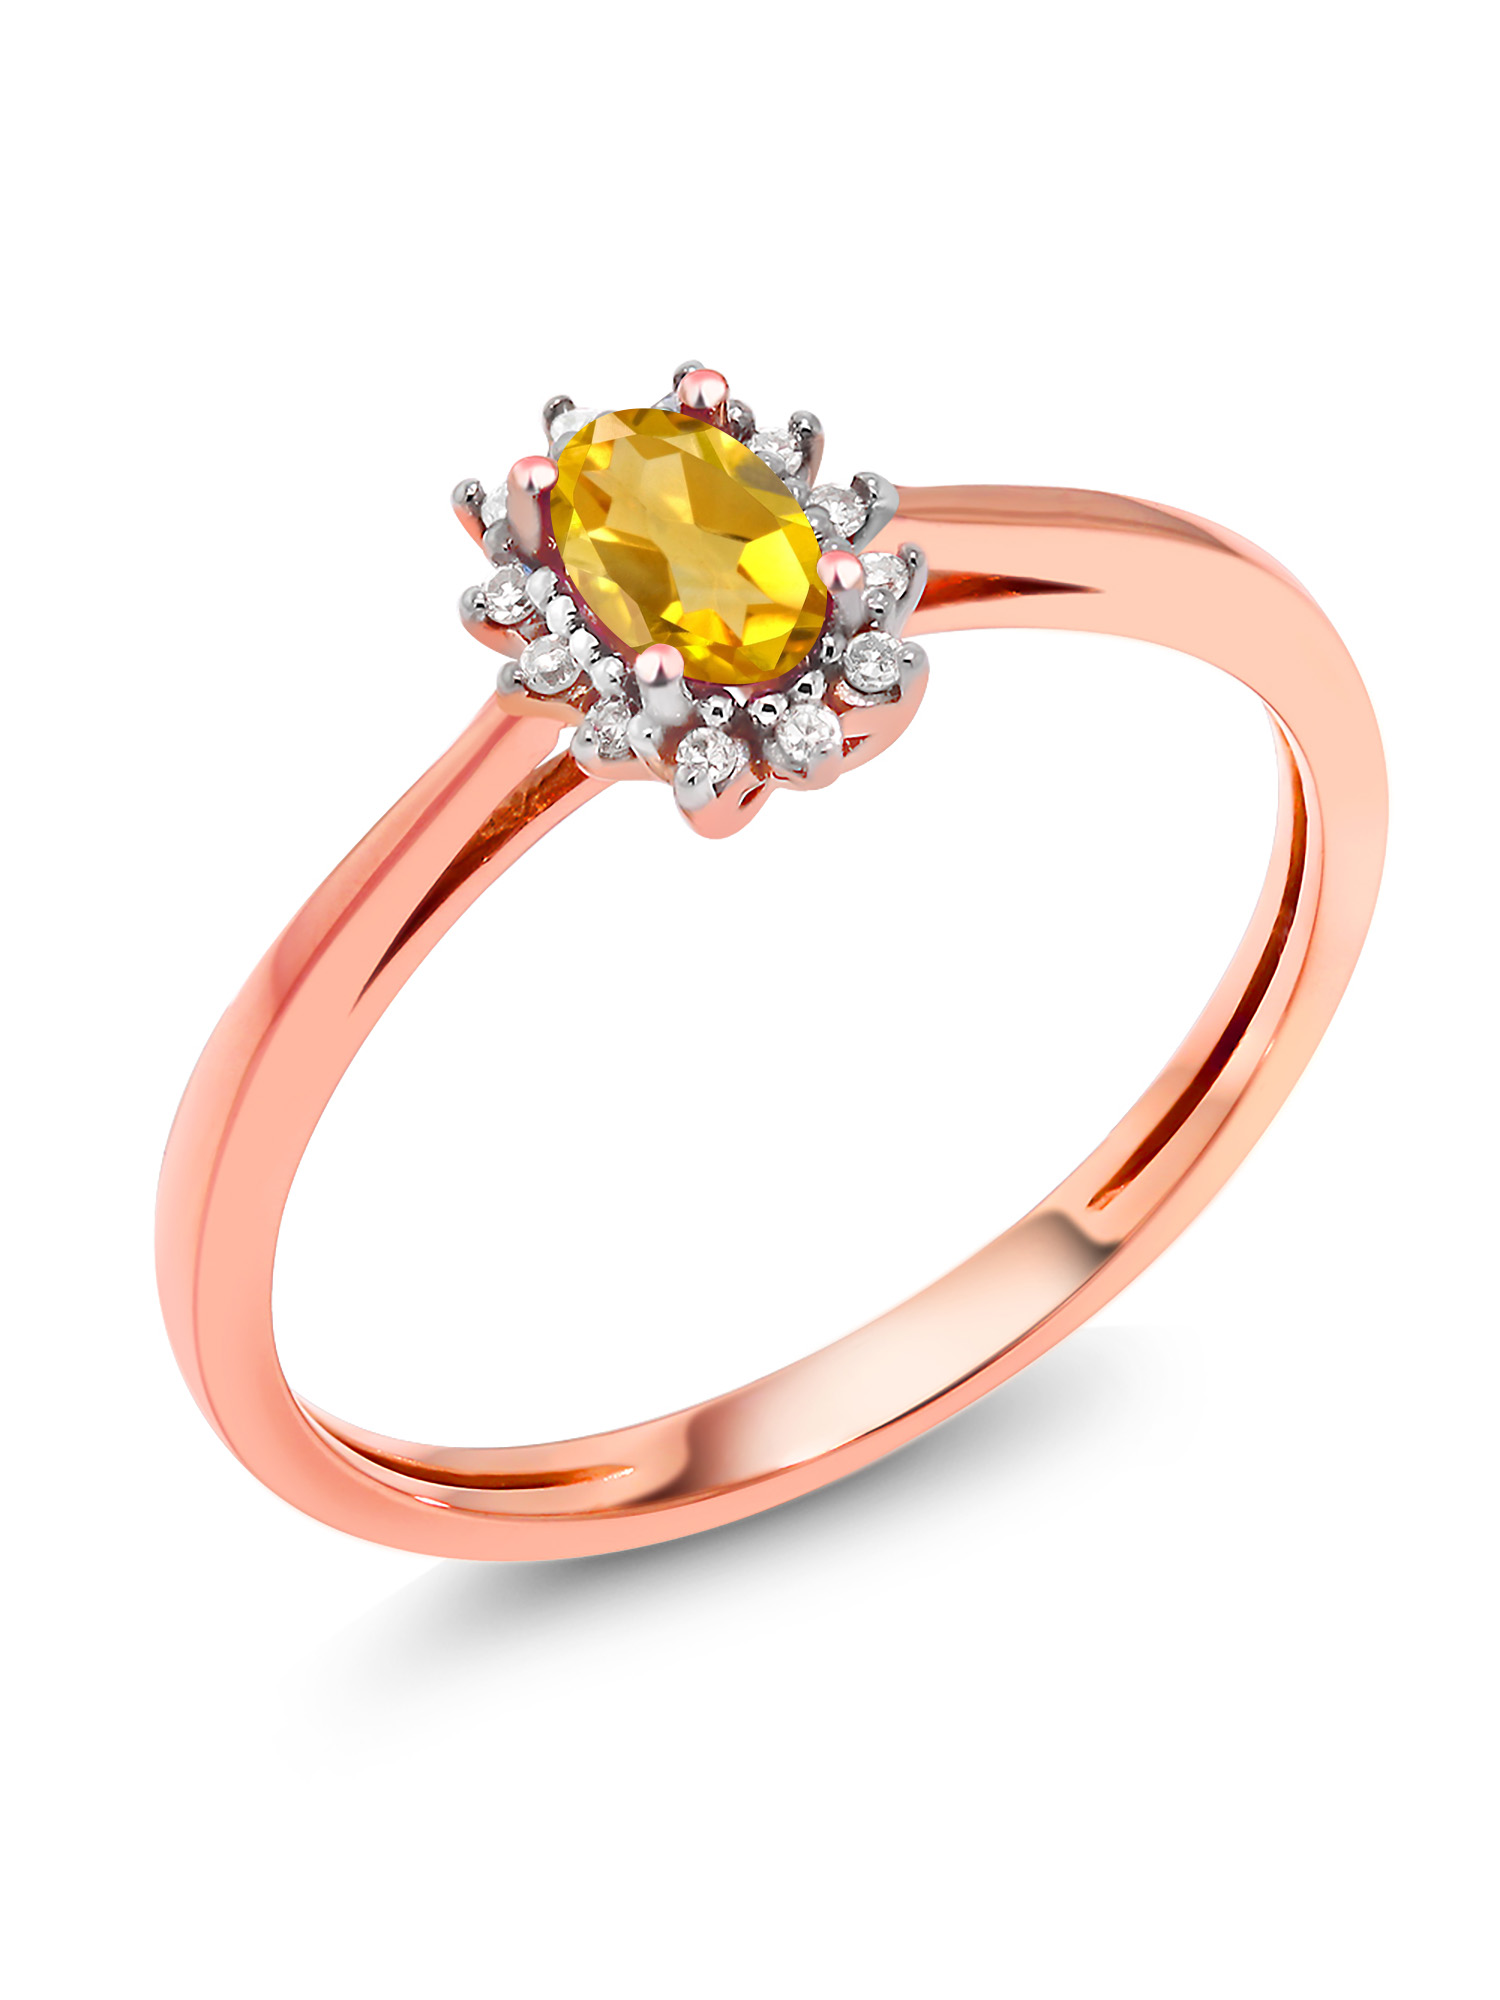 Gem Stone King 0.28 Ct Oval Yellow Citrine White Diamond 18K Rose Gold Ring - image 1 of 5